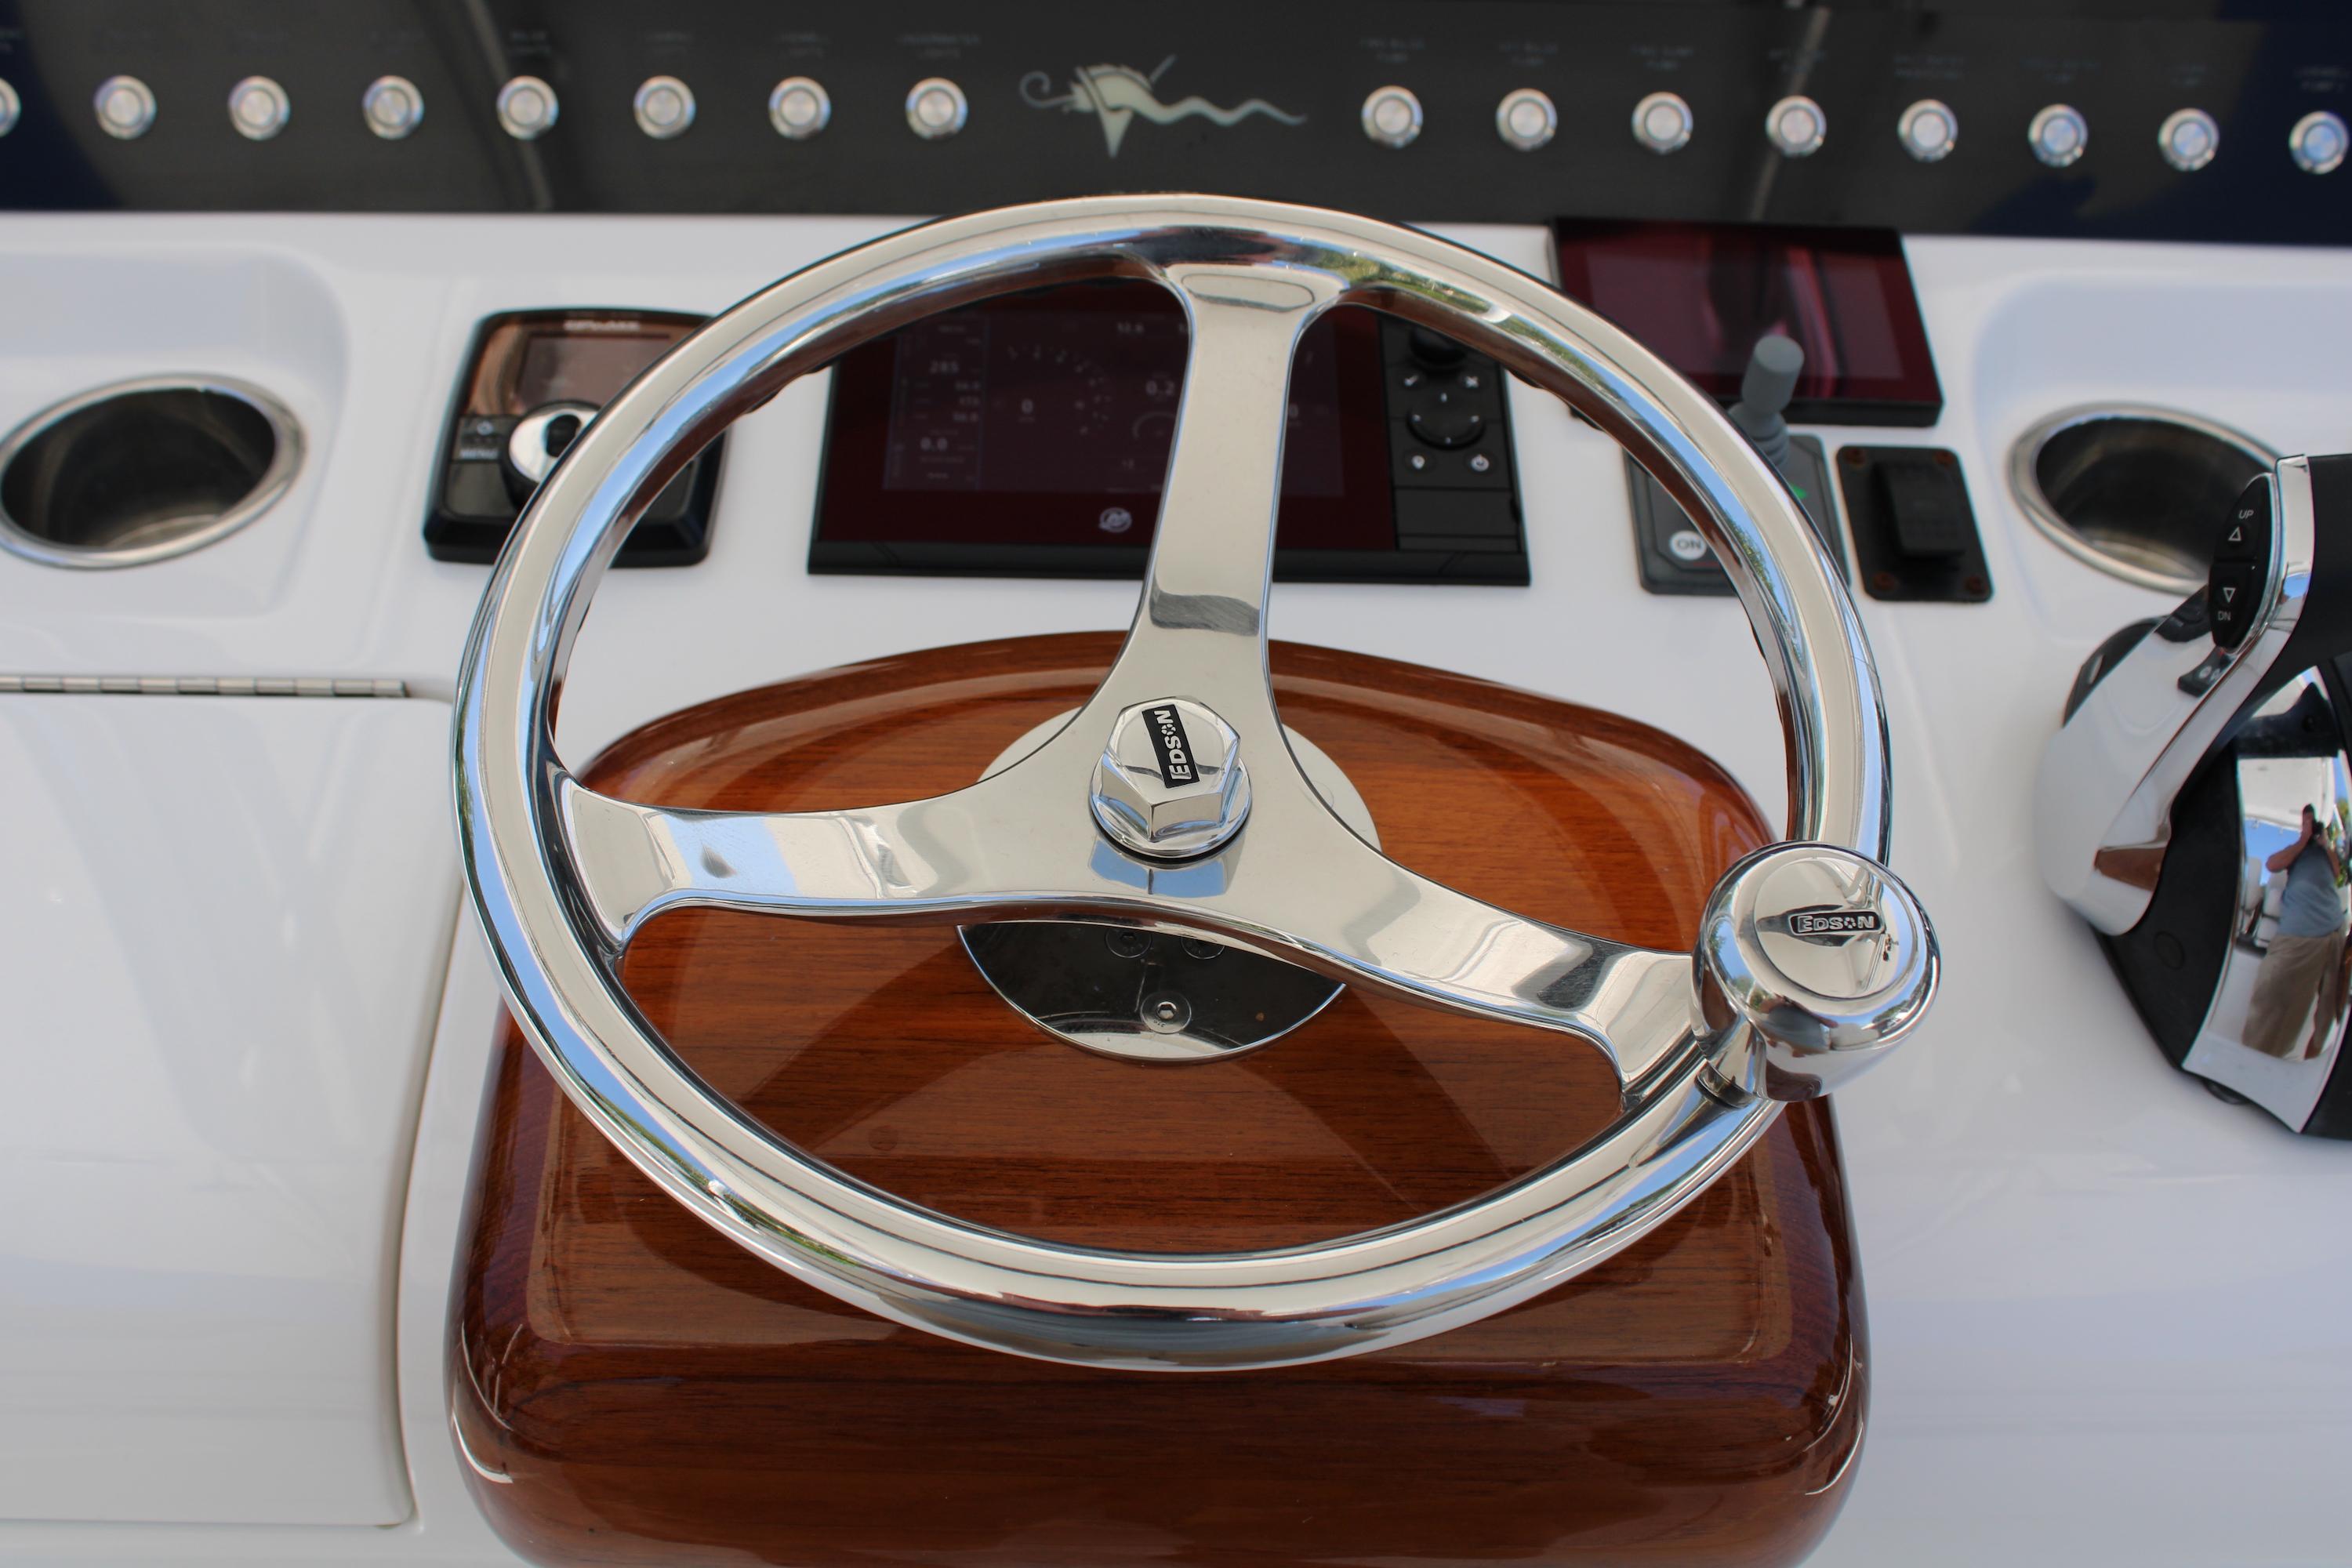 Valhalla 33 No Way Jose - Edson Stainless Steel Steering Wheel with Power Knob